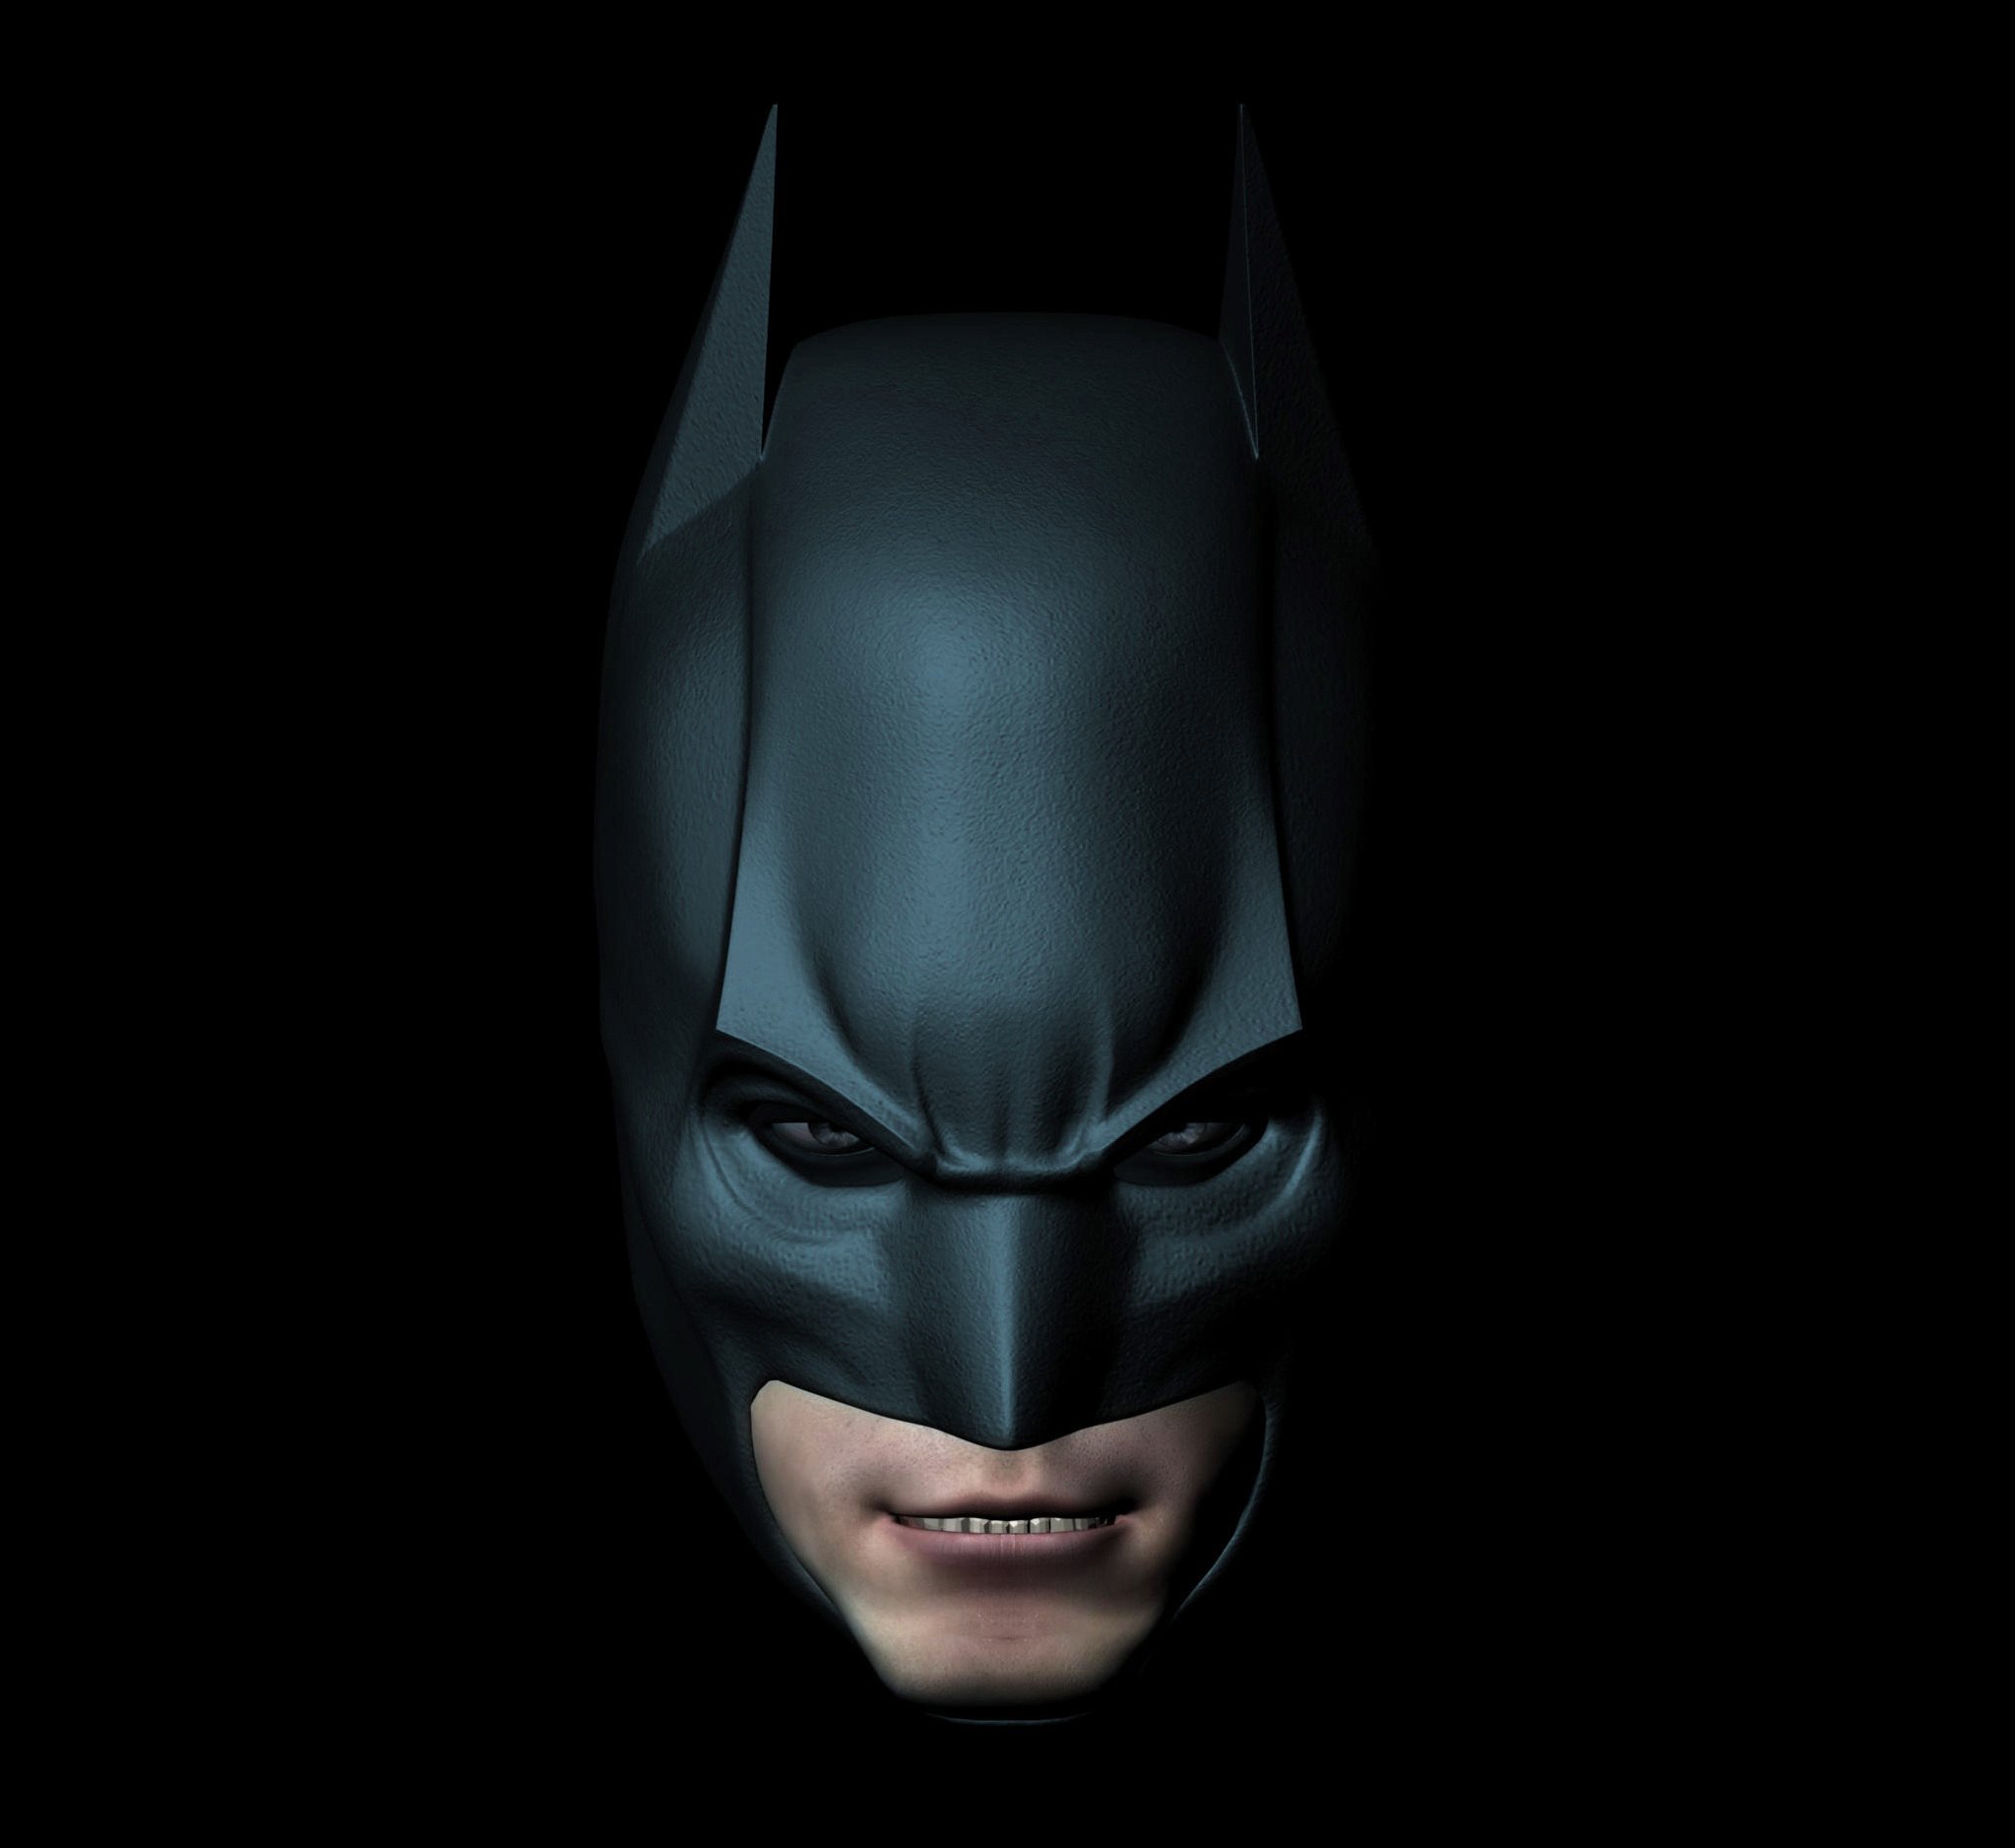 Маска бэтмена на лице. Бен Аффлек Бэтмен маска. Лицо Бэтмена. Голова Бэтмена. Маска Бэтмена.